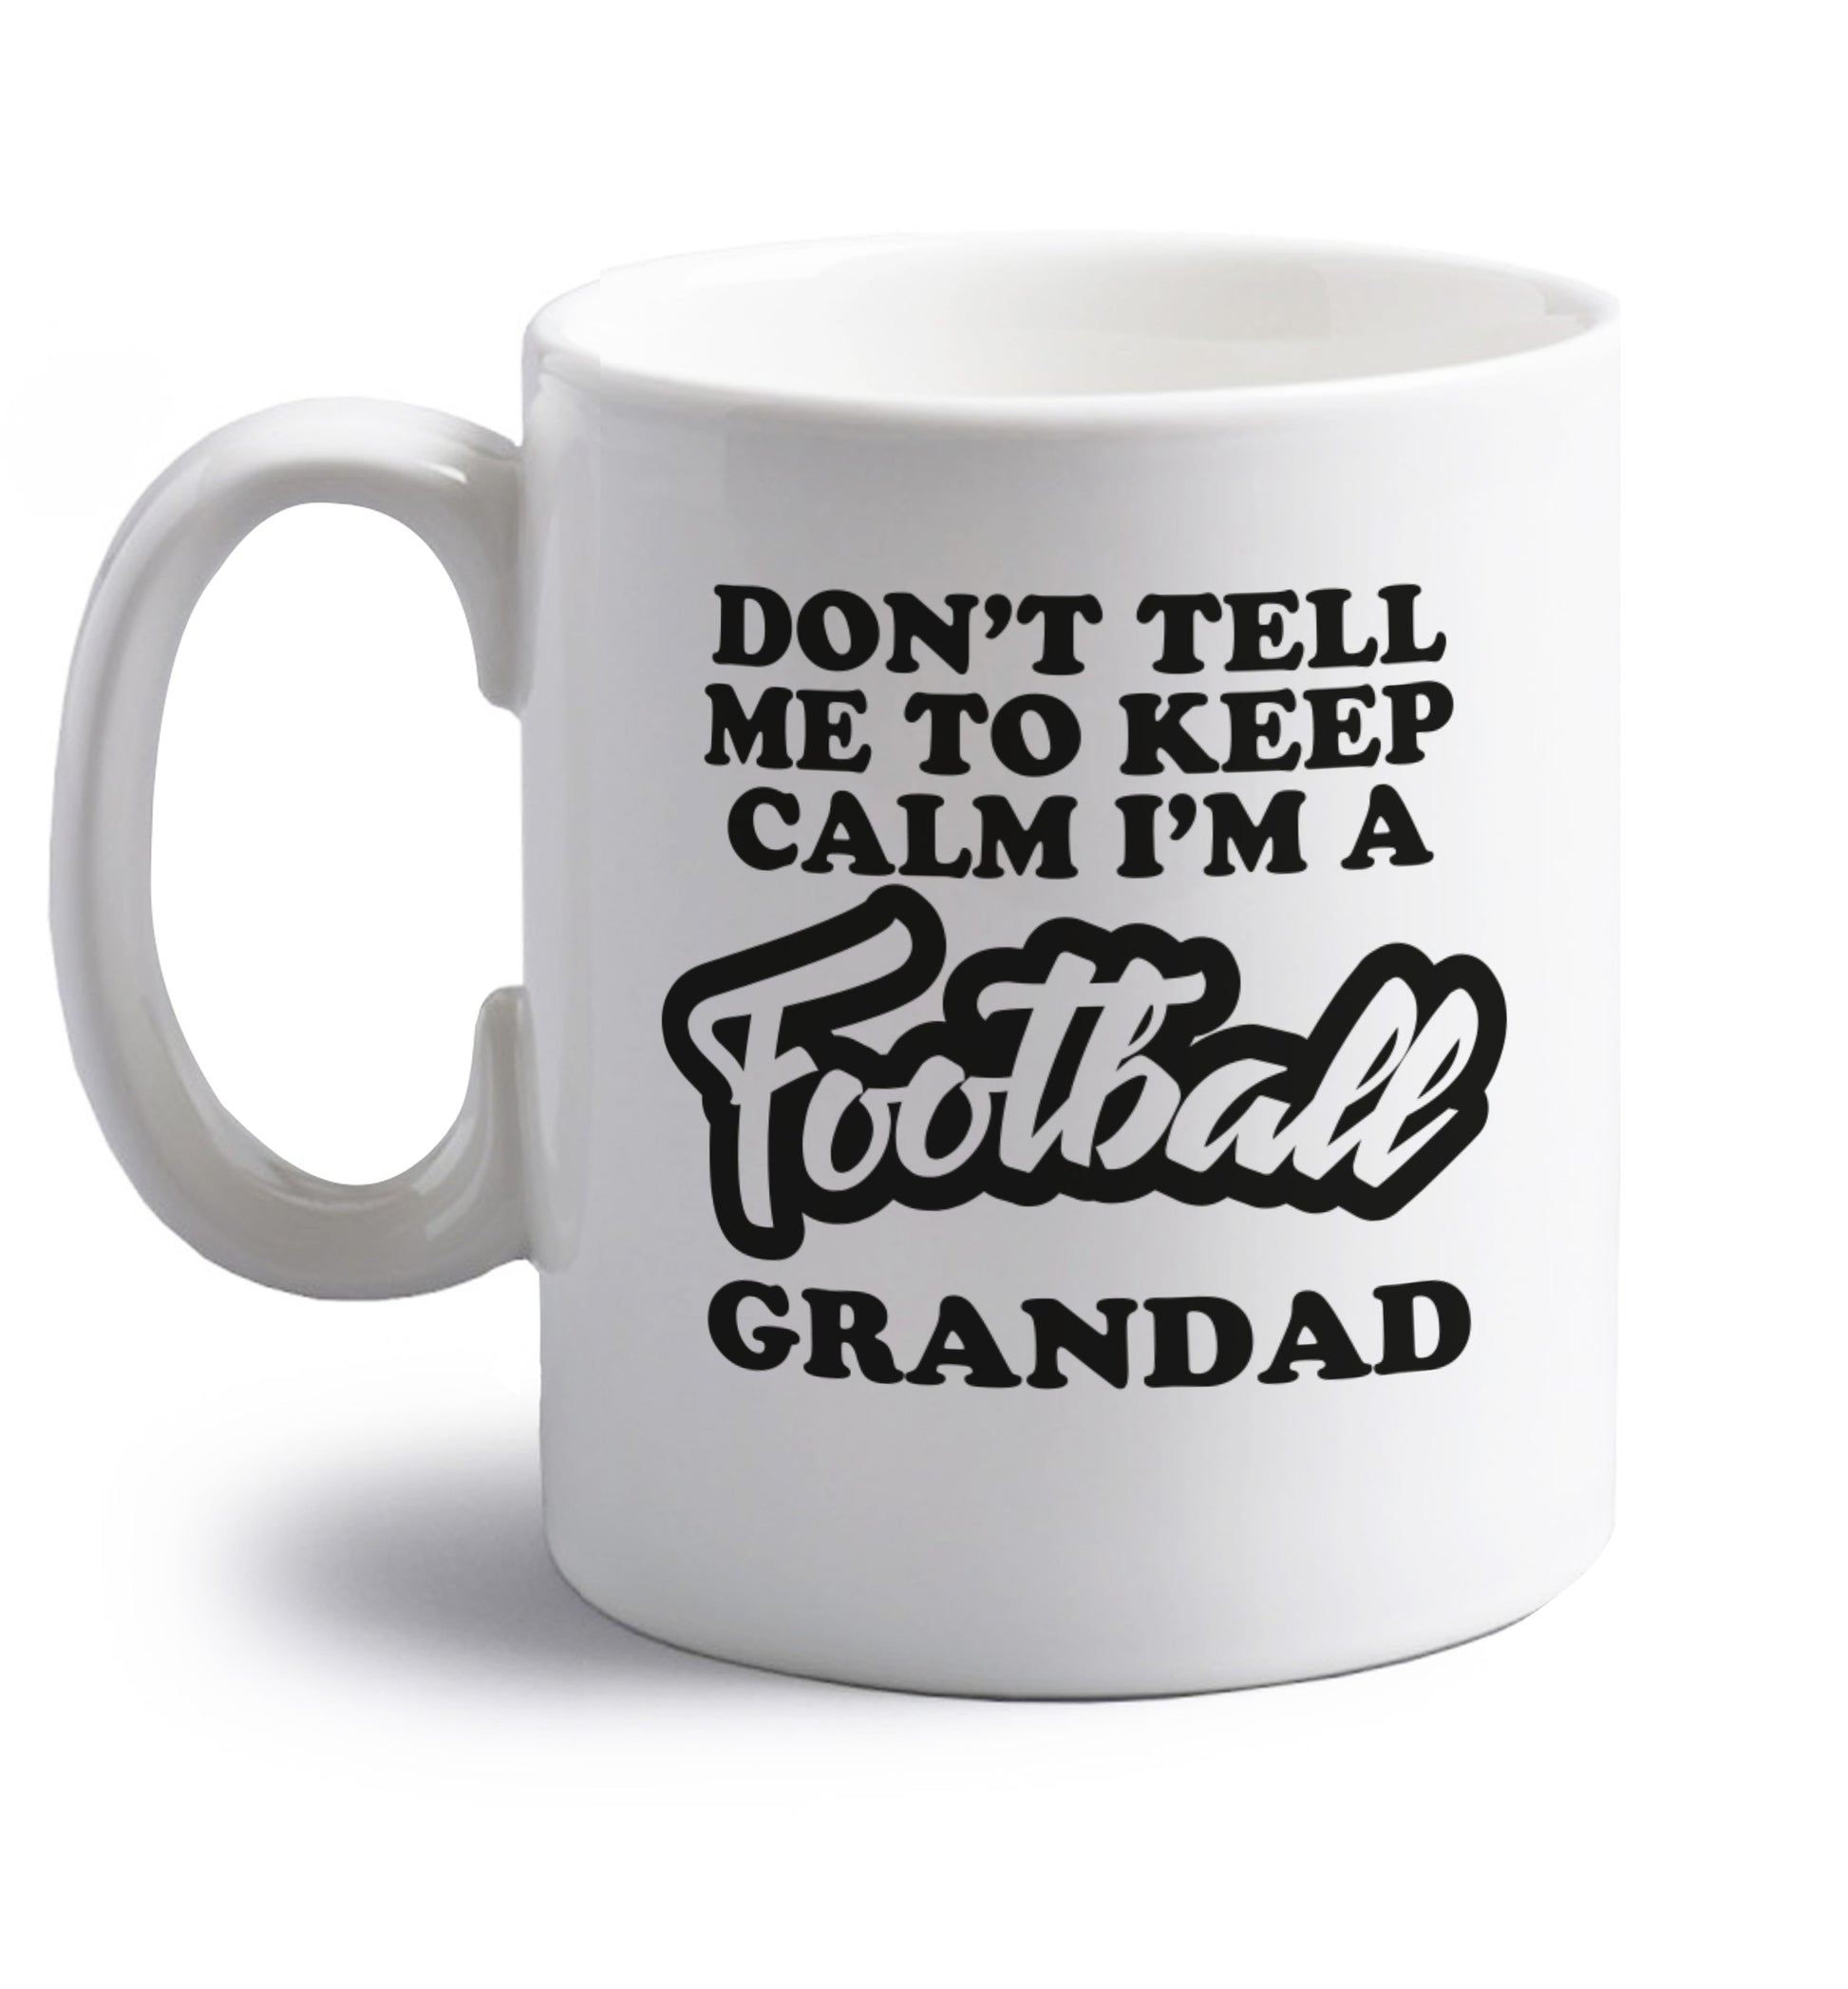 Don't tell me to keep calm I'm a football grandad right handed white ceramic mug 